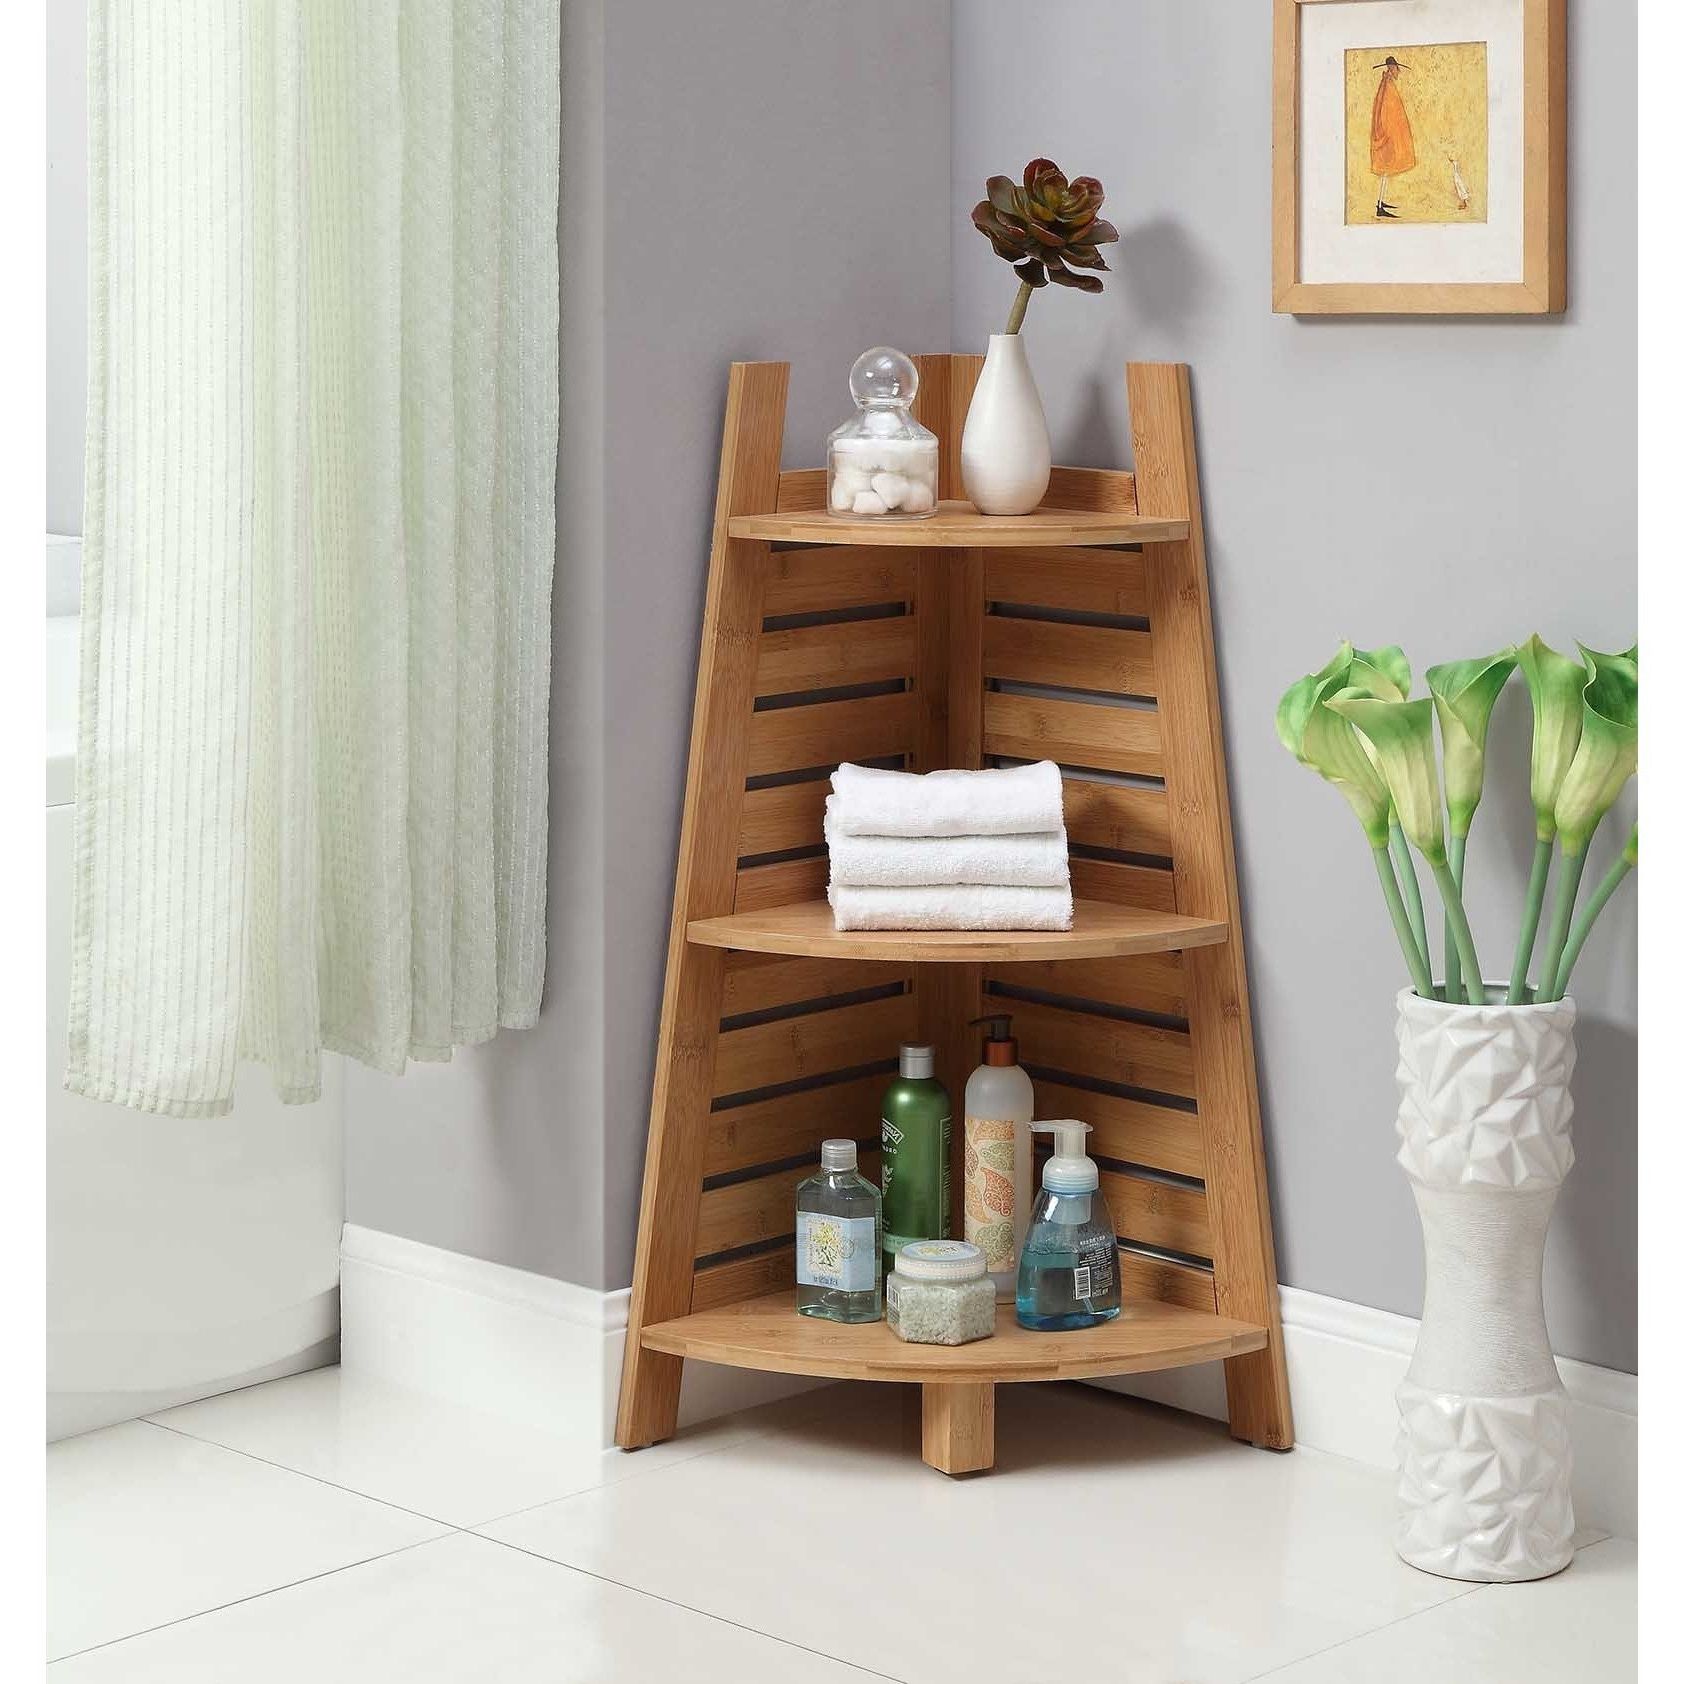 2019 Buy Linen Tower Bathroom Cabinets & Storage Online At Regarding Arminta Wood Sideboards (Photo 18 of 20)